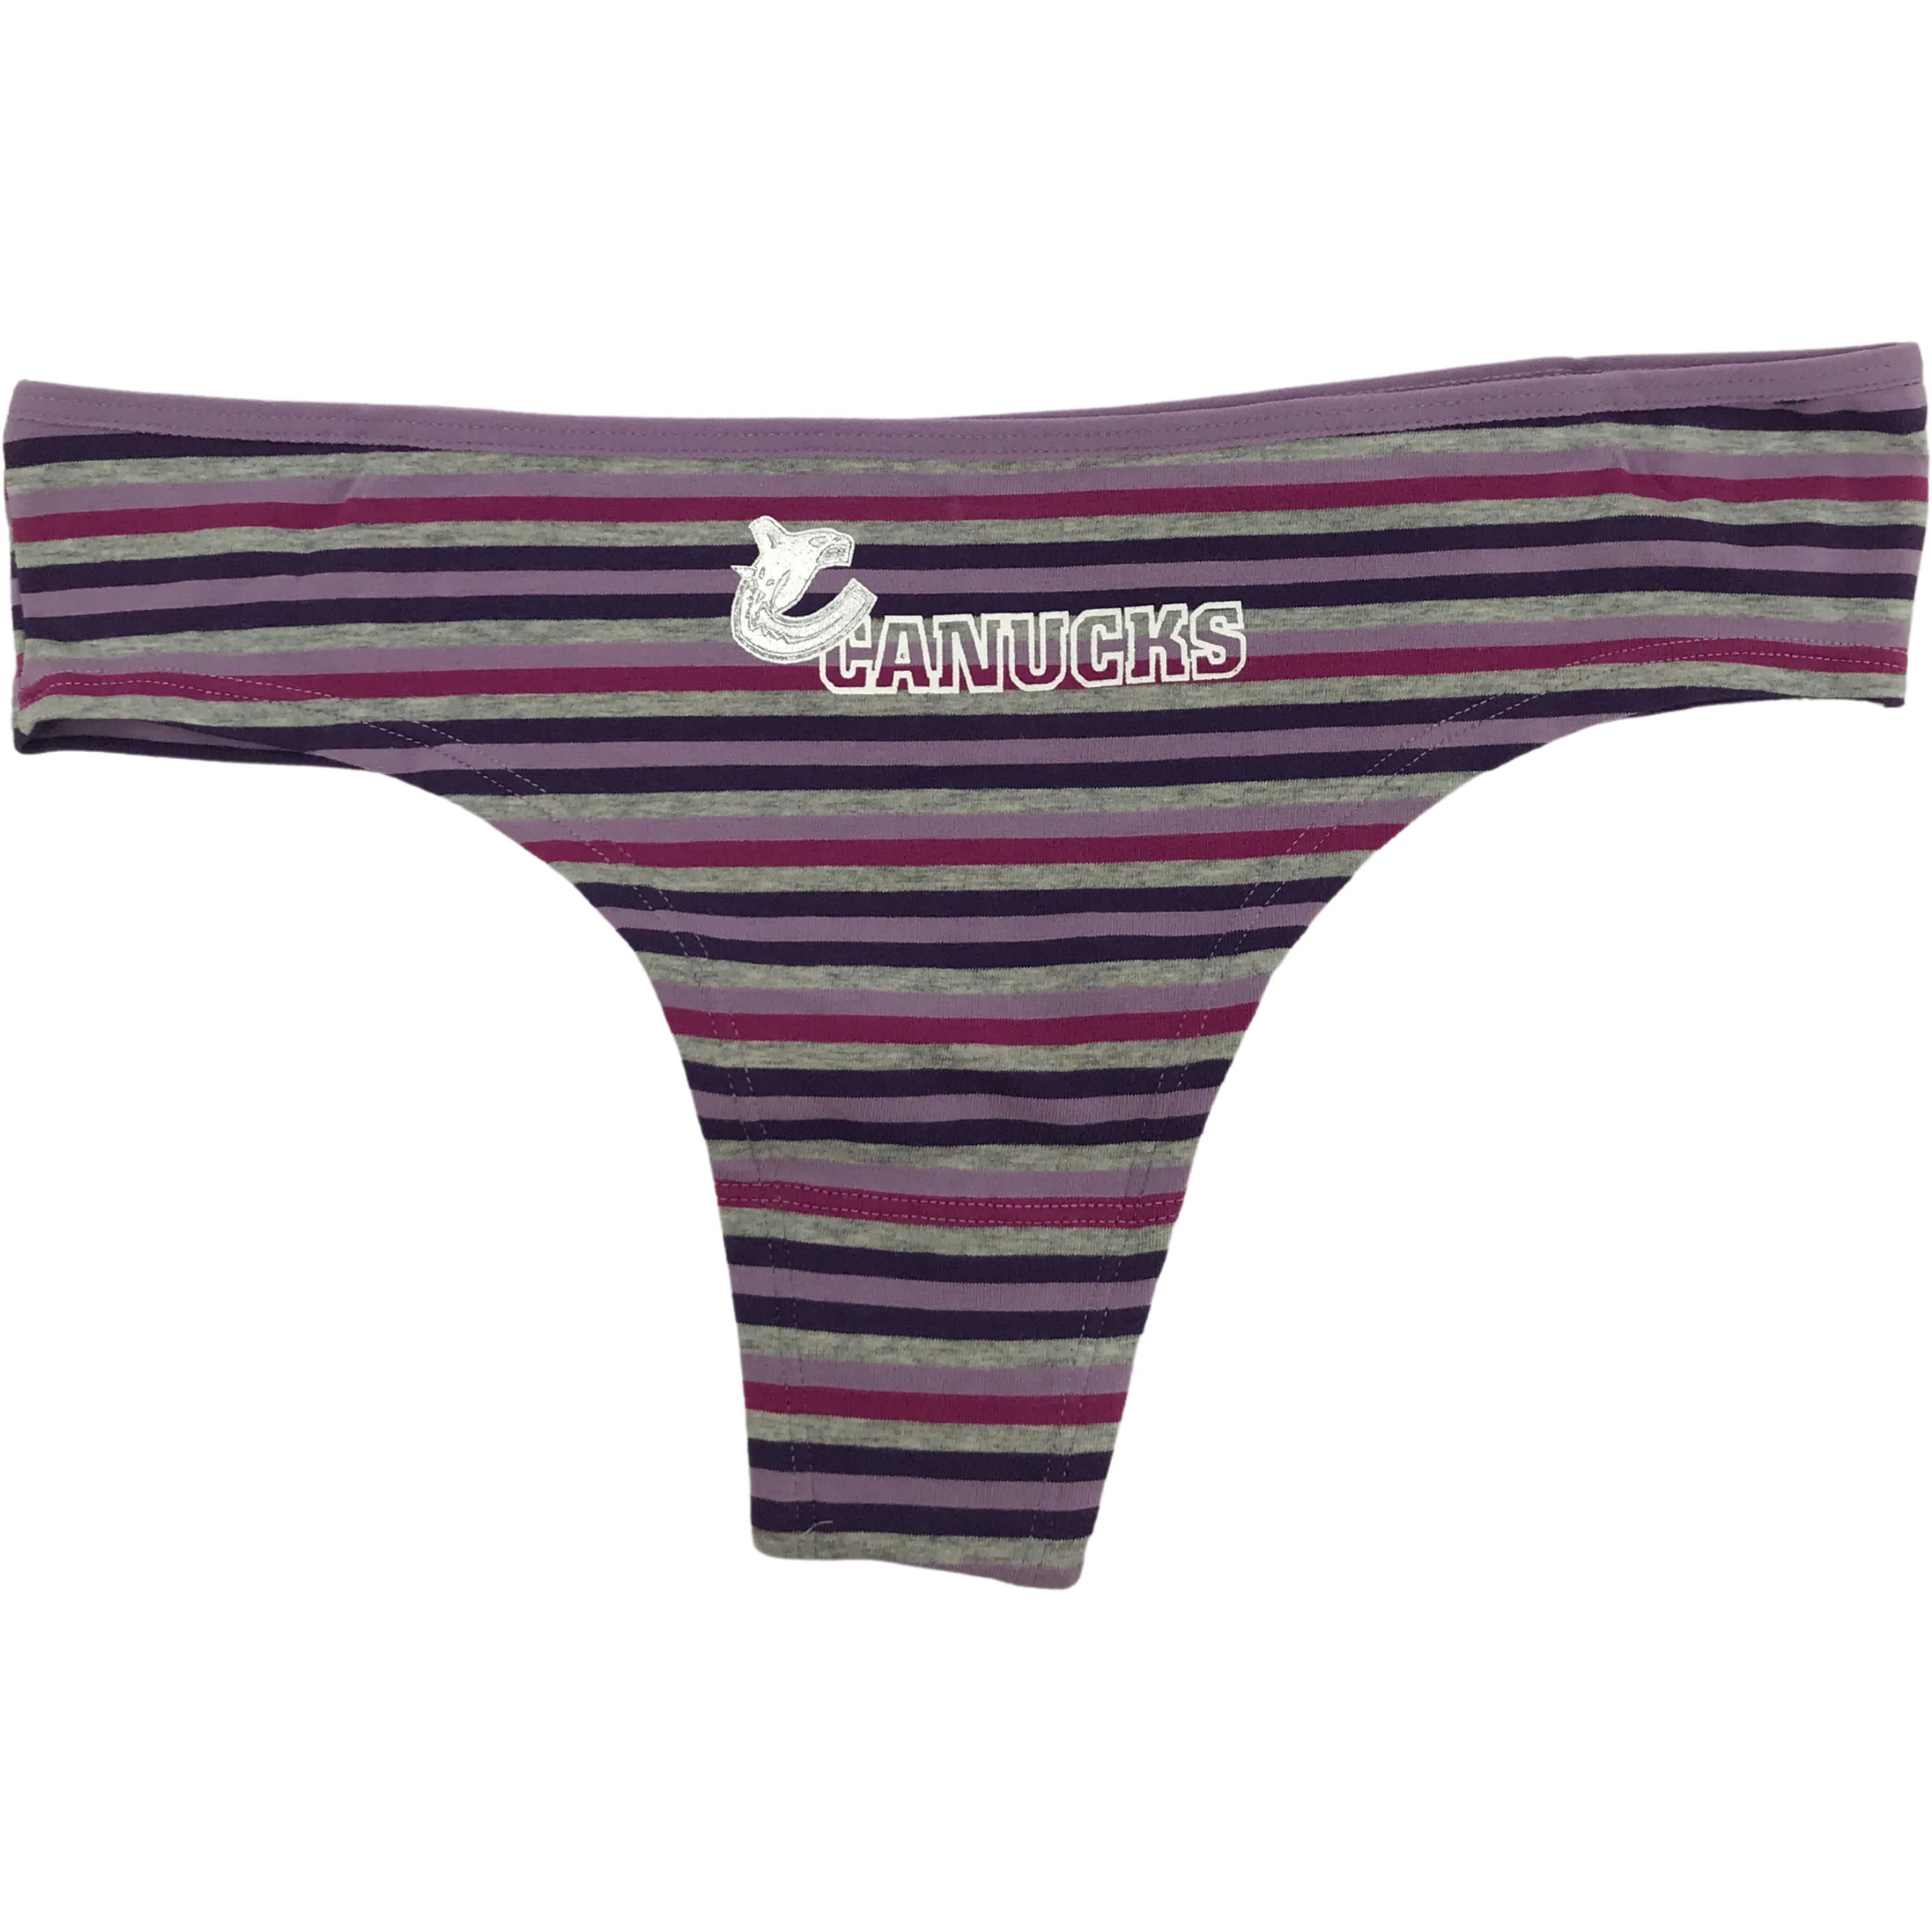 NHL Vancouver Canucks Ladies Thong Underwear / Large / 2 Pack / Panties / Purple / Vancouver Canucks Logo